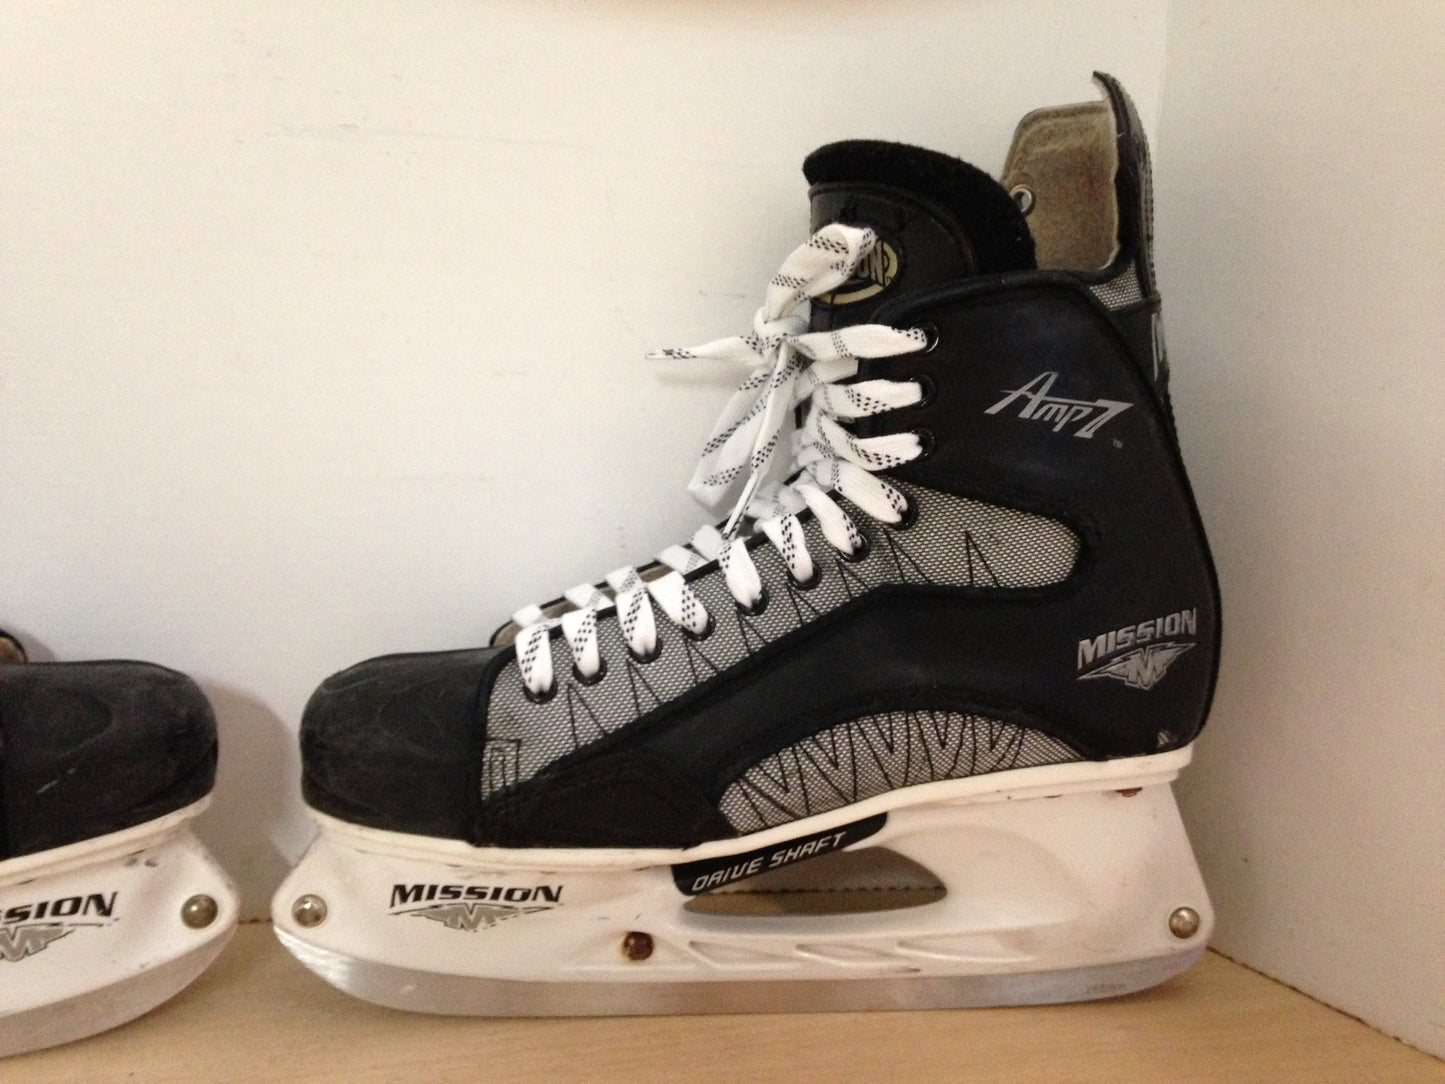 Hockey Skates Men's Size 11 Shoe Size Mission Amp 7 Fantastic Quality